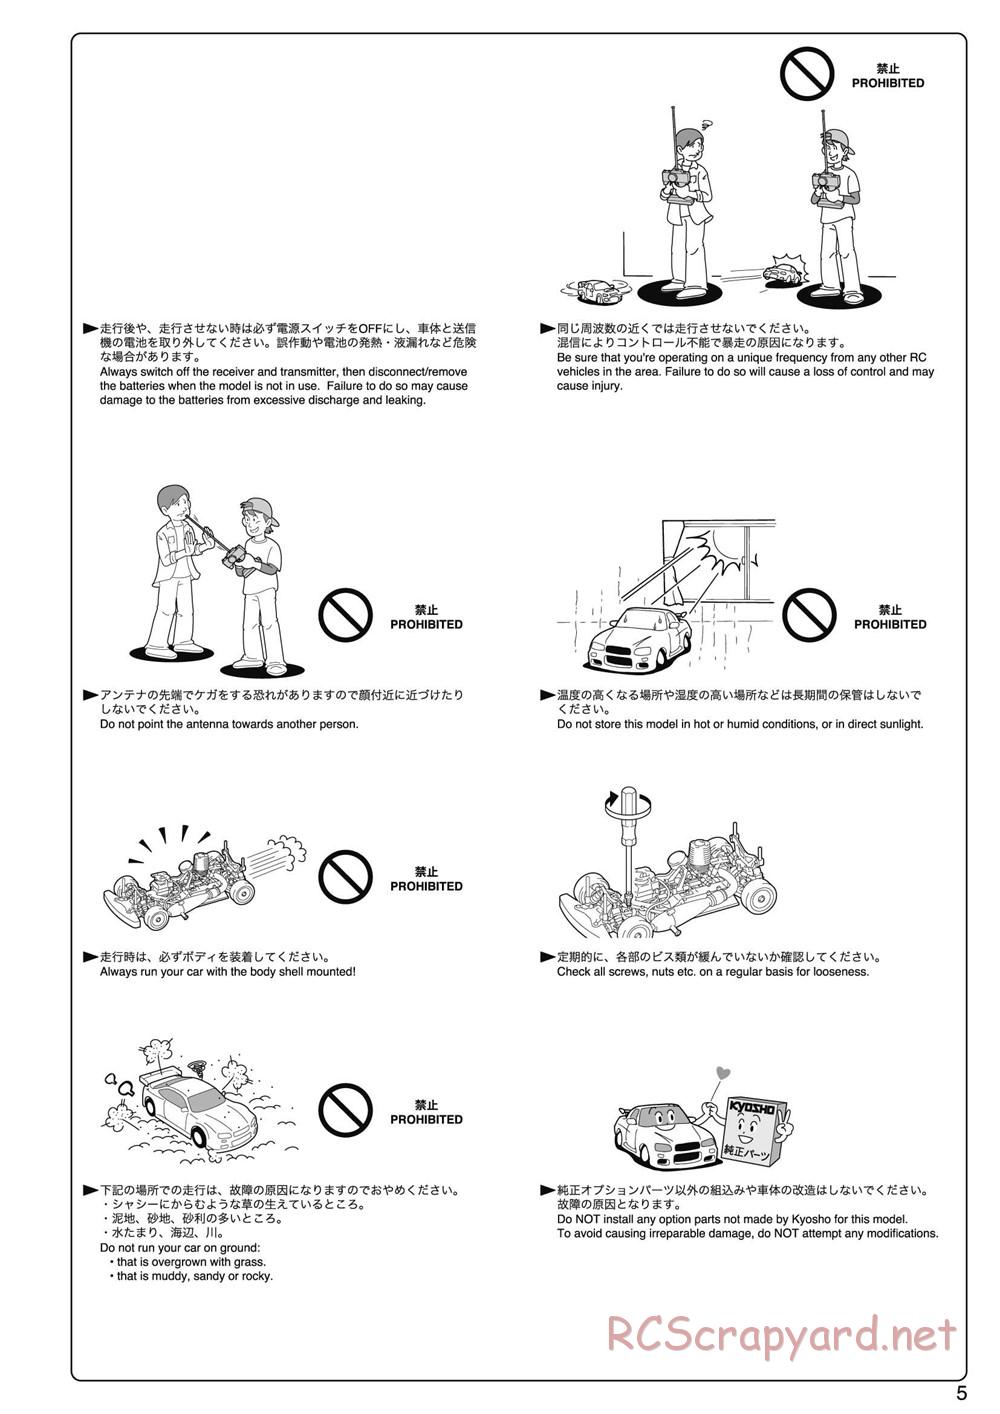 Kyosho - Lazer ZX-5 FS2 SP - Manual - Page 5